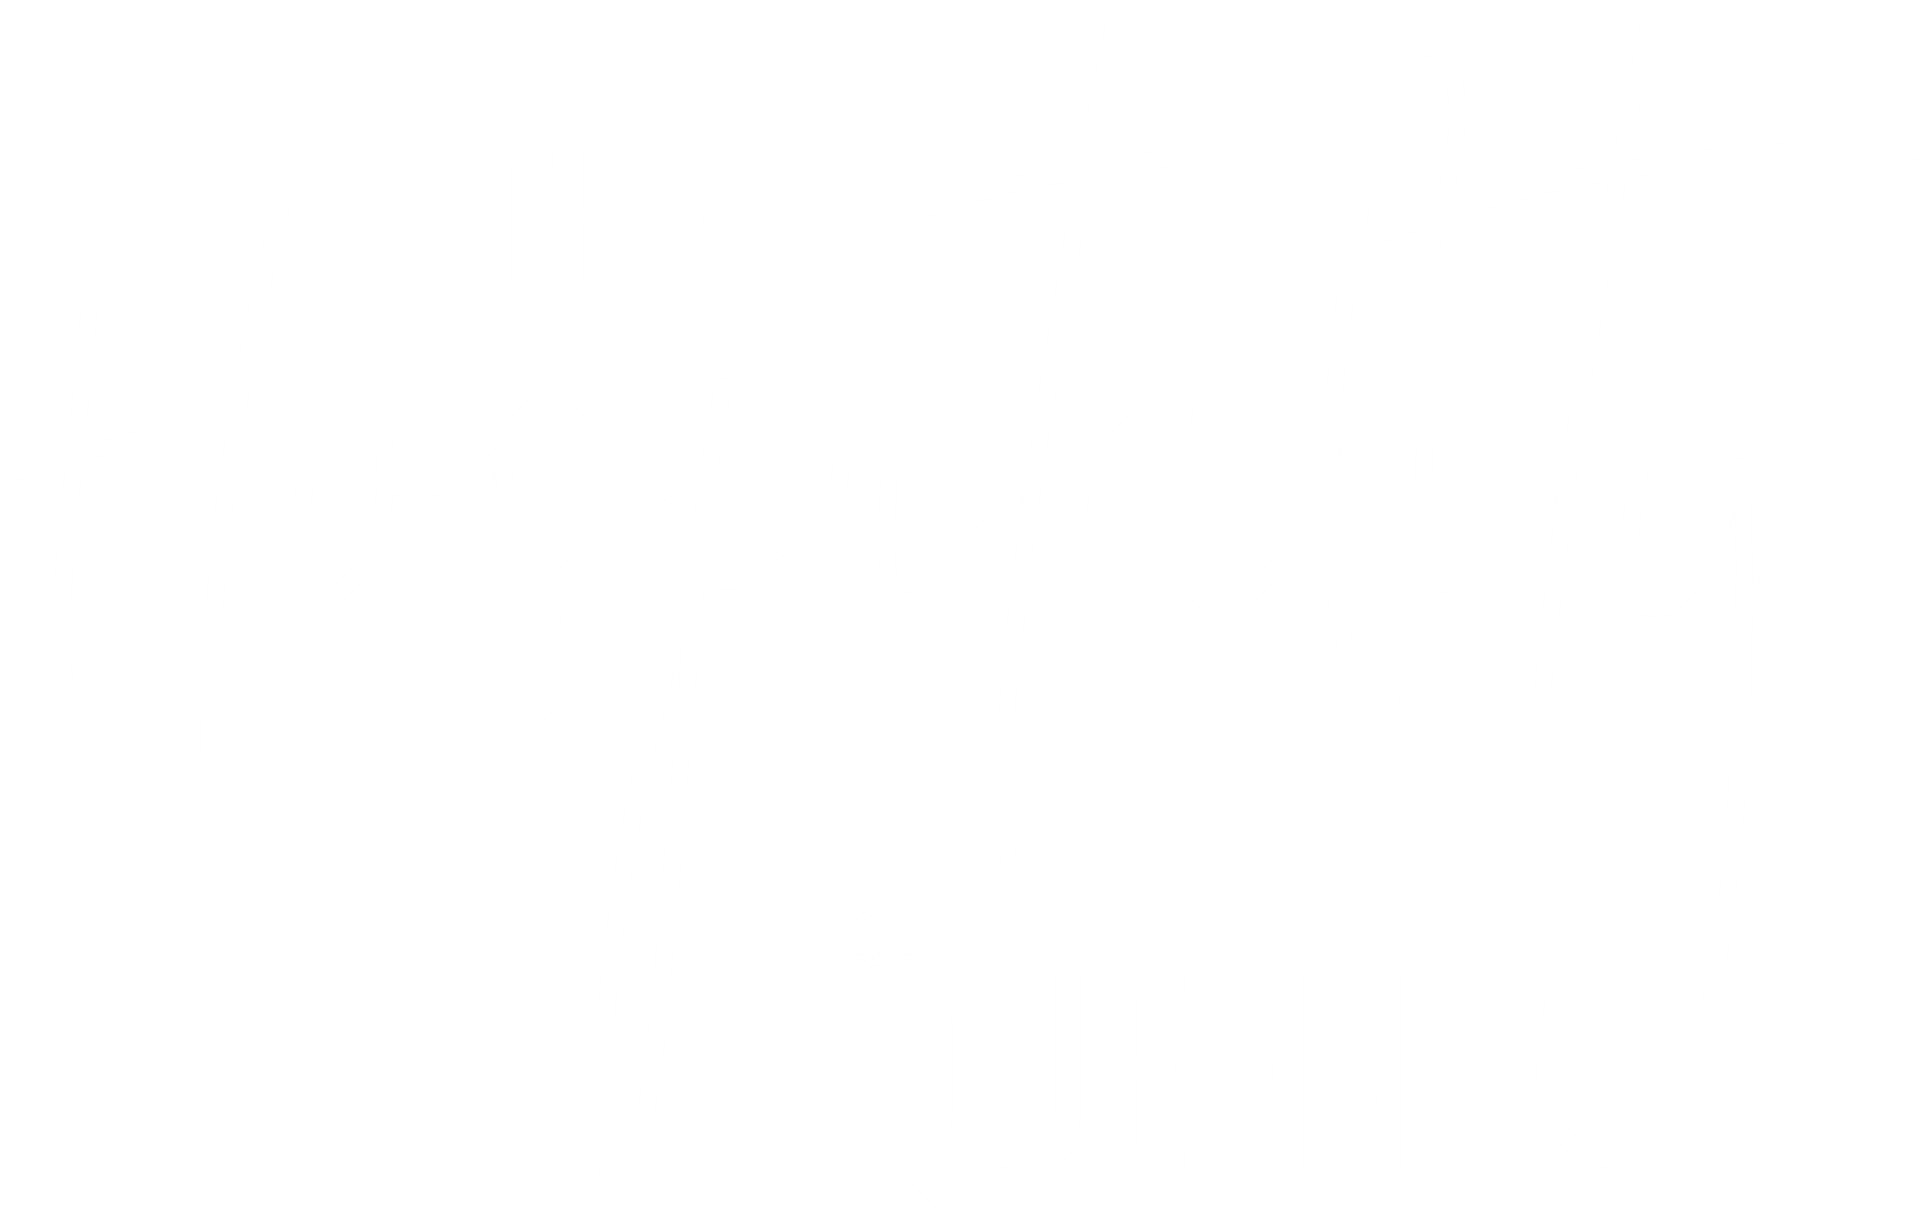 hospitality-queen-logo